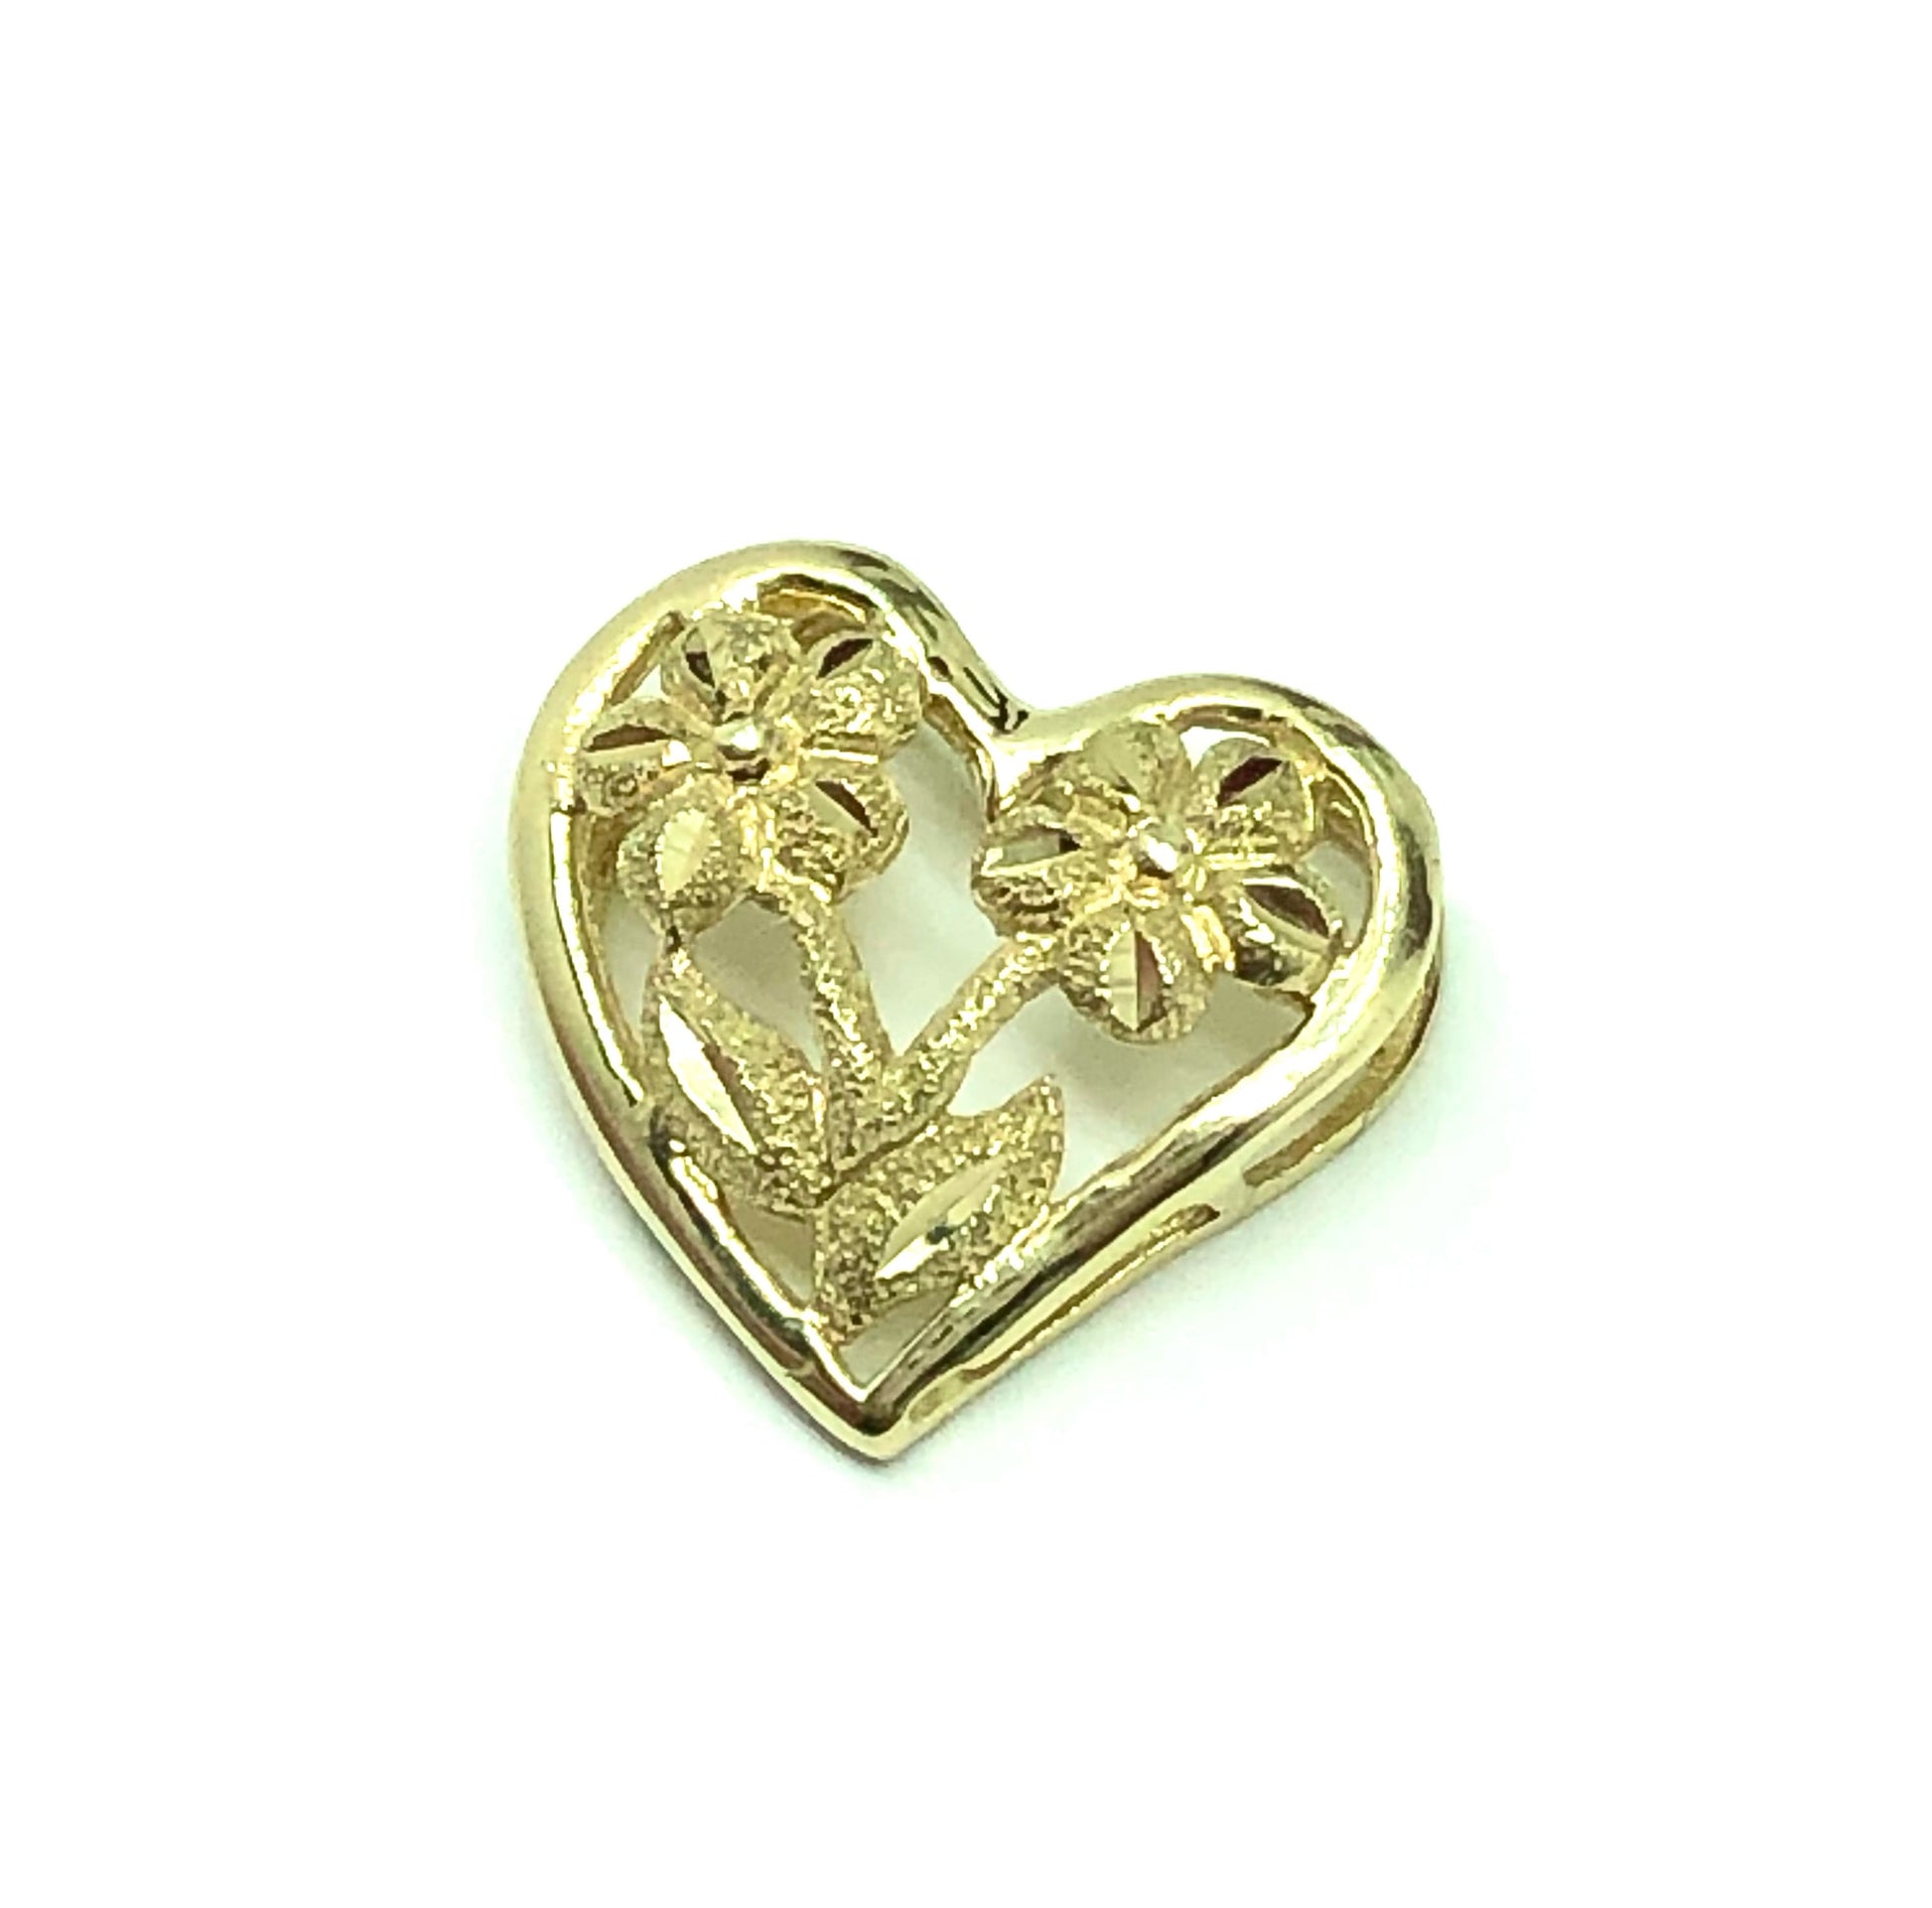 Jewelry Womens 10k Gold Glittery Sandblasted Cut-out Flower Design Heart Pendant - Blingschlingers Jewelry